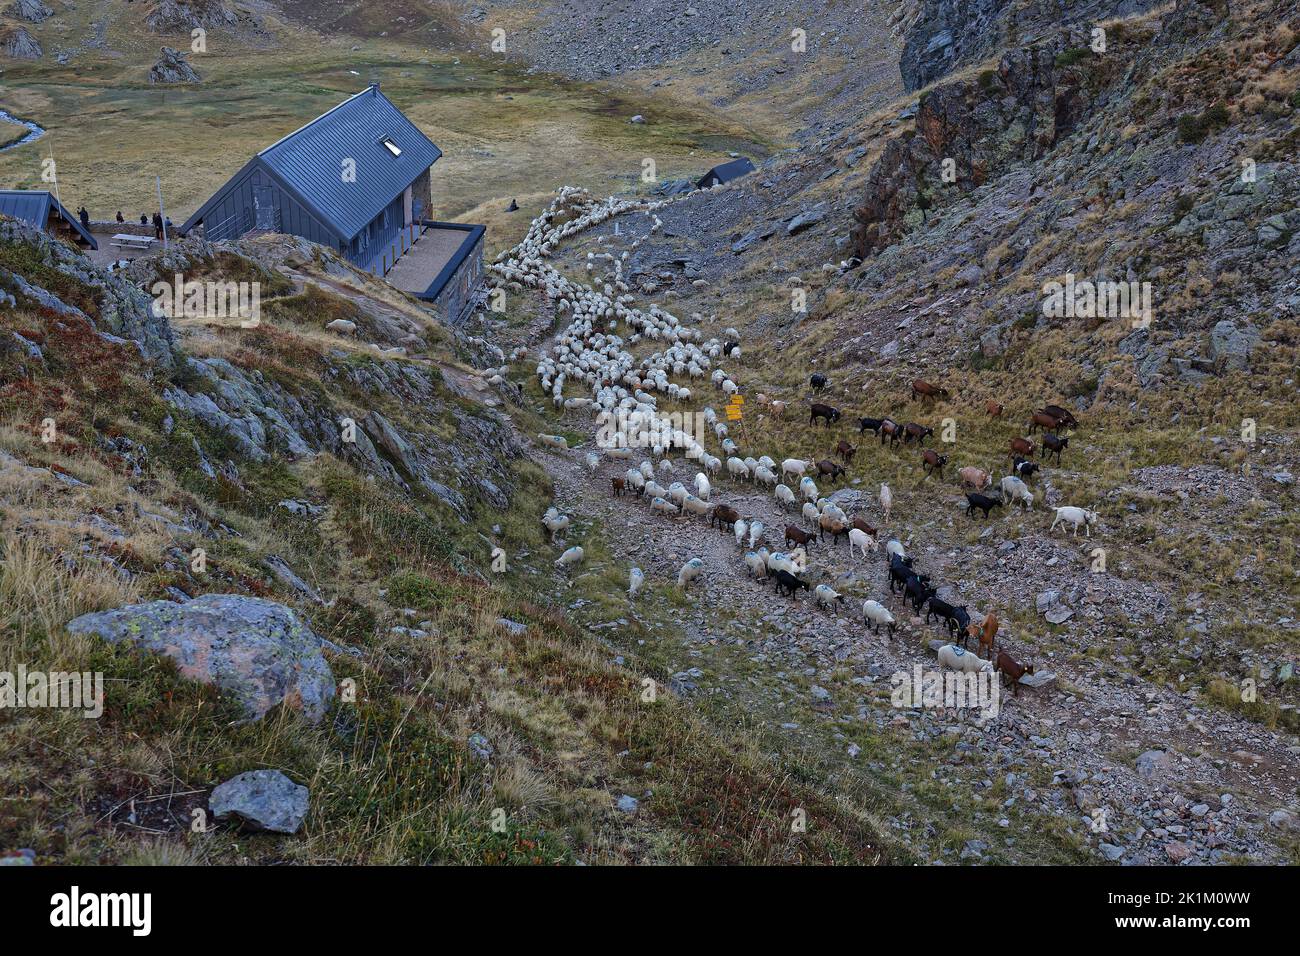 Herd of sheeps around La Pra mountain hut Stock Photo